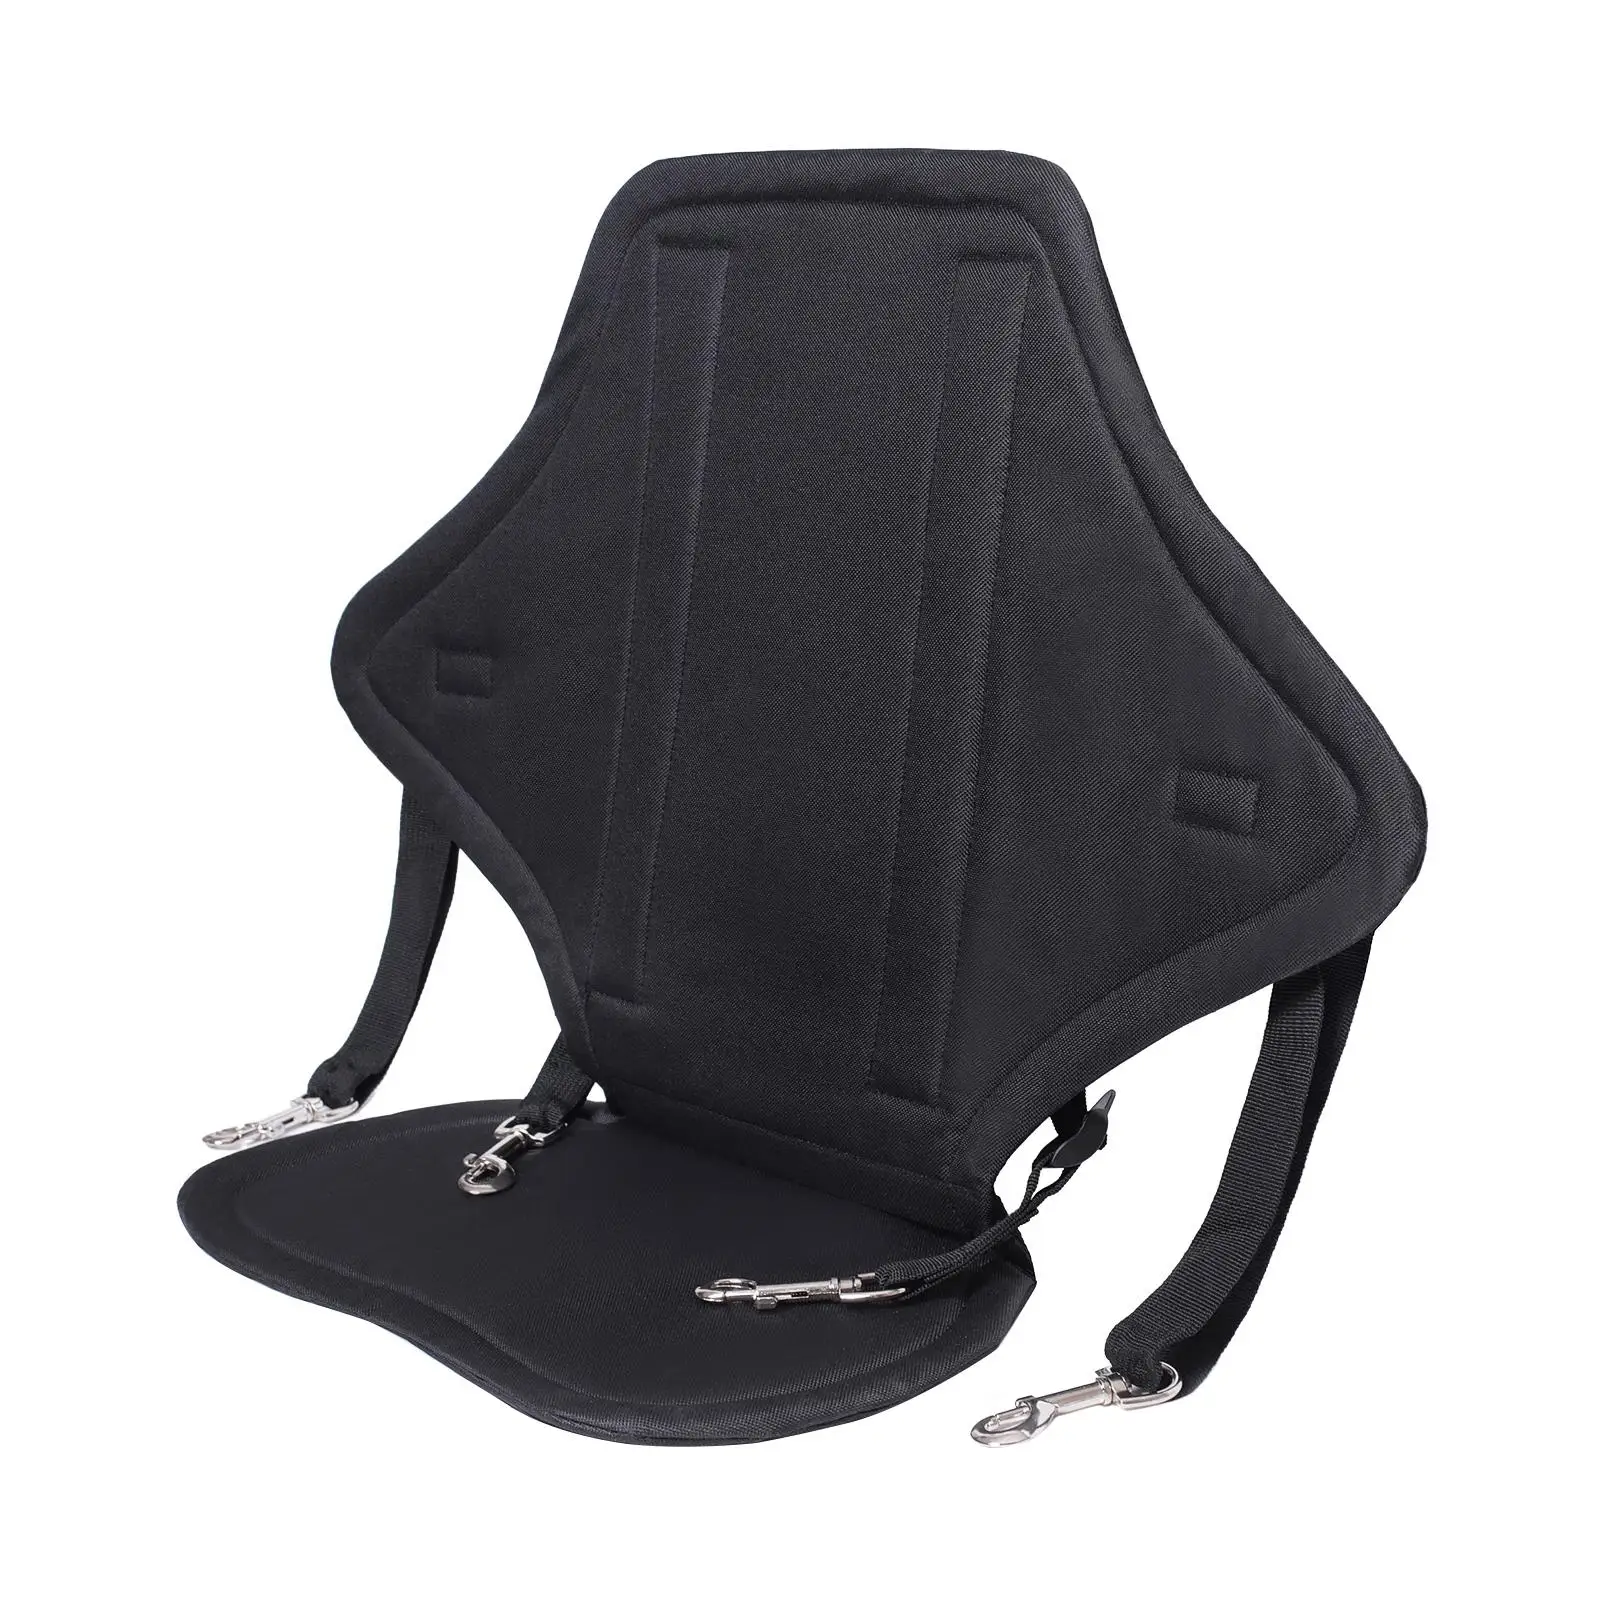 Detachable Canoe Seat Cushion Adjustable with Support Comfortable Backrest Nylon